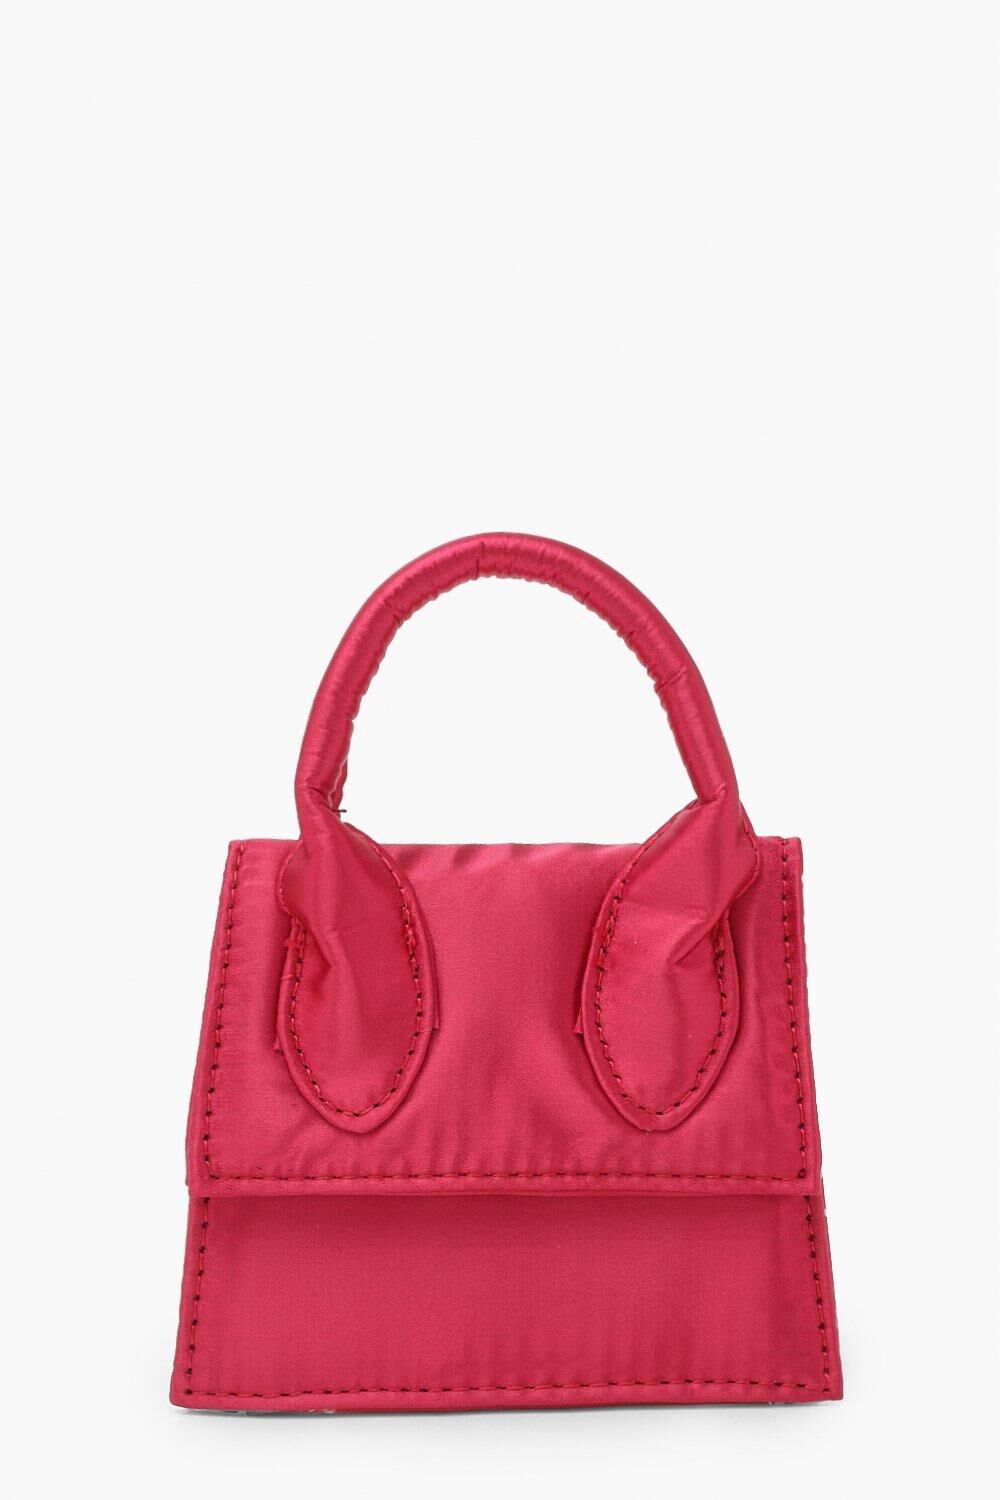 Boohoo Mini Satin Grab Bag- Red  - Size: ONE SIZE